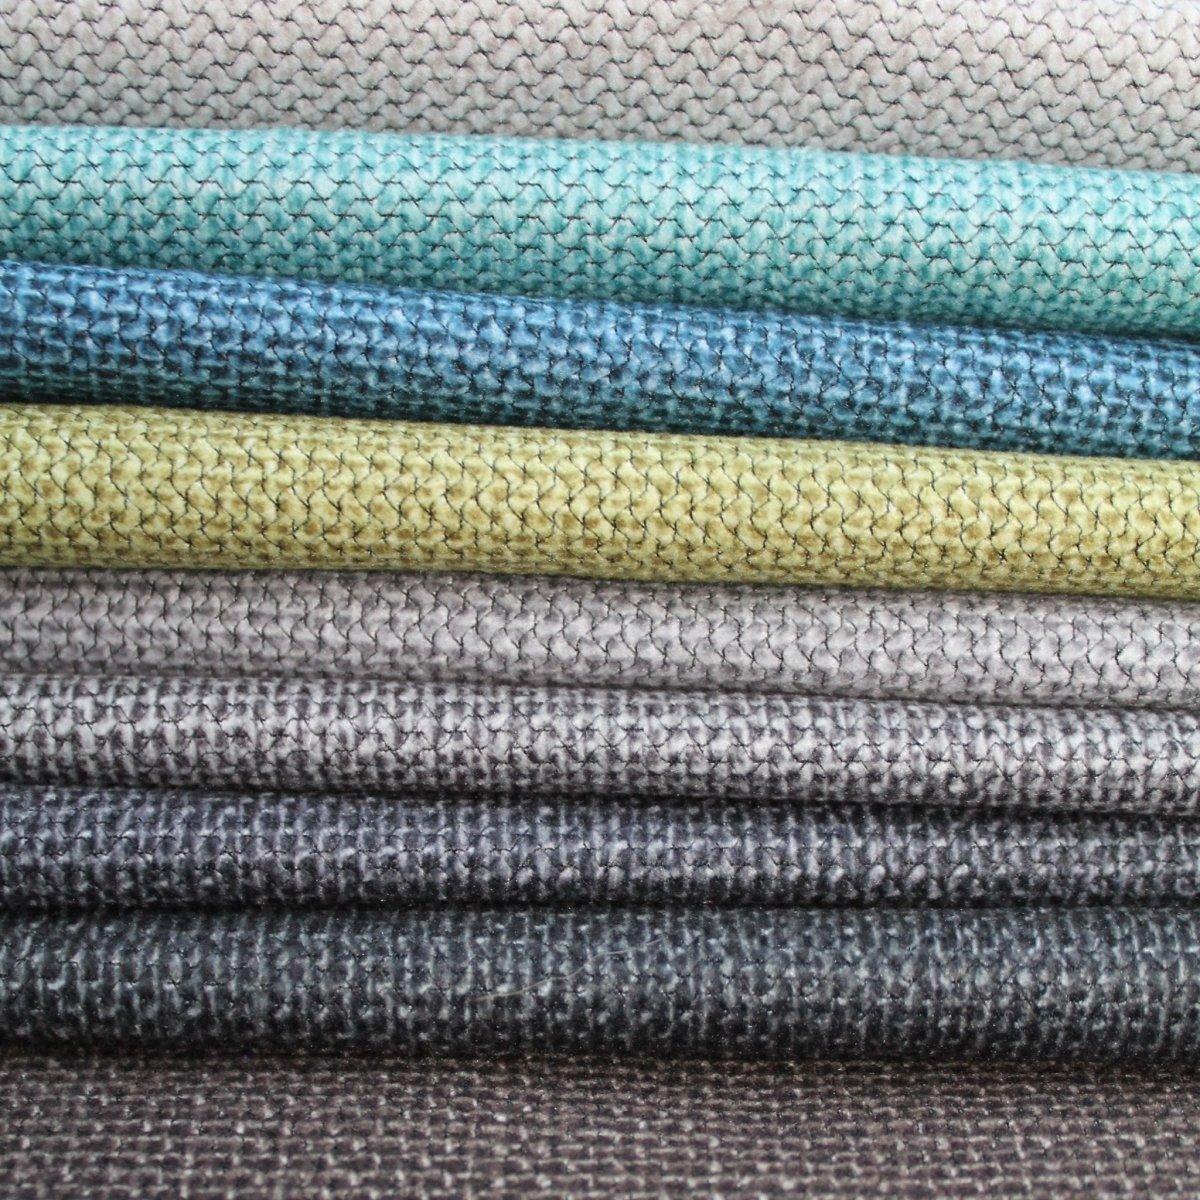 Upholstery Fabric Brushed Tina Light Grey